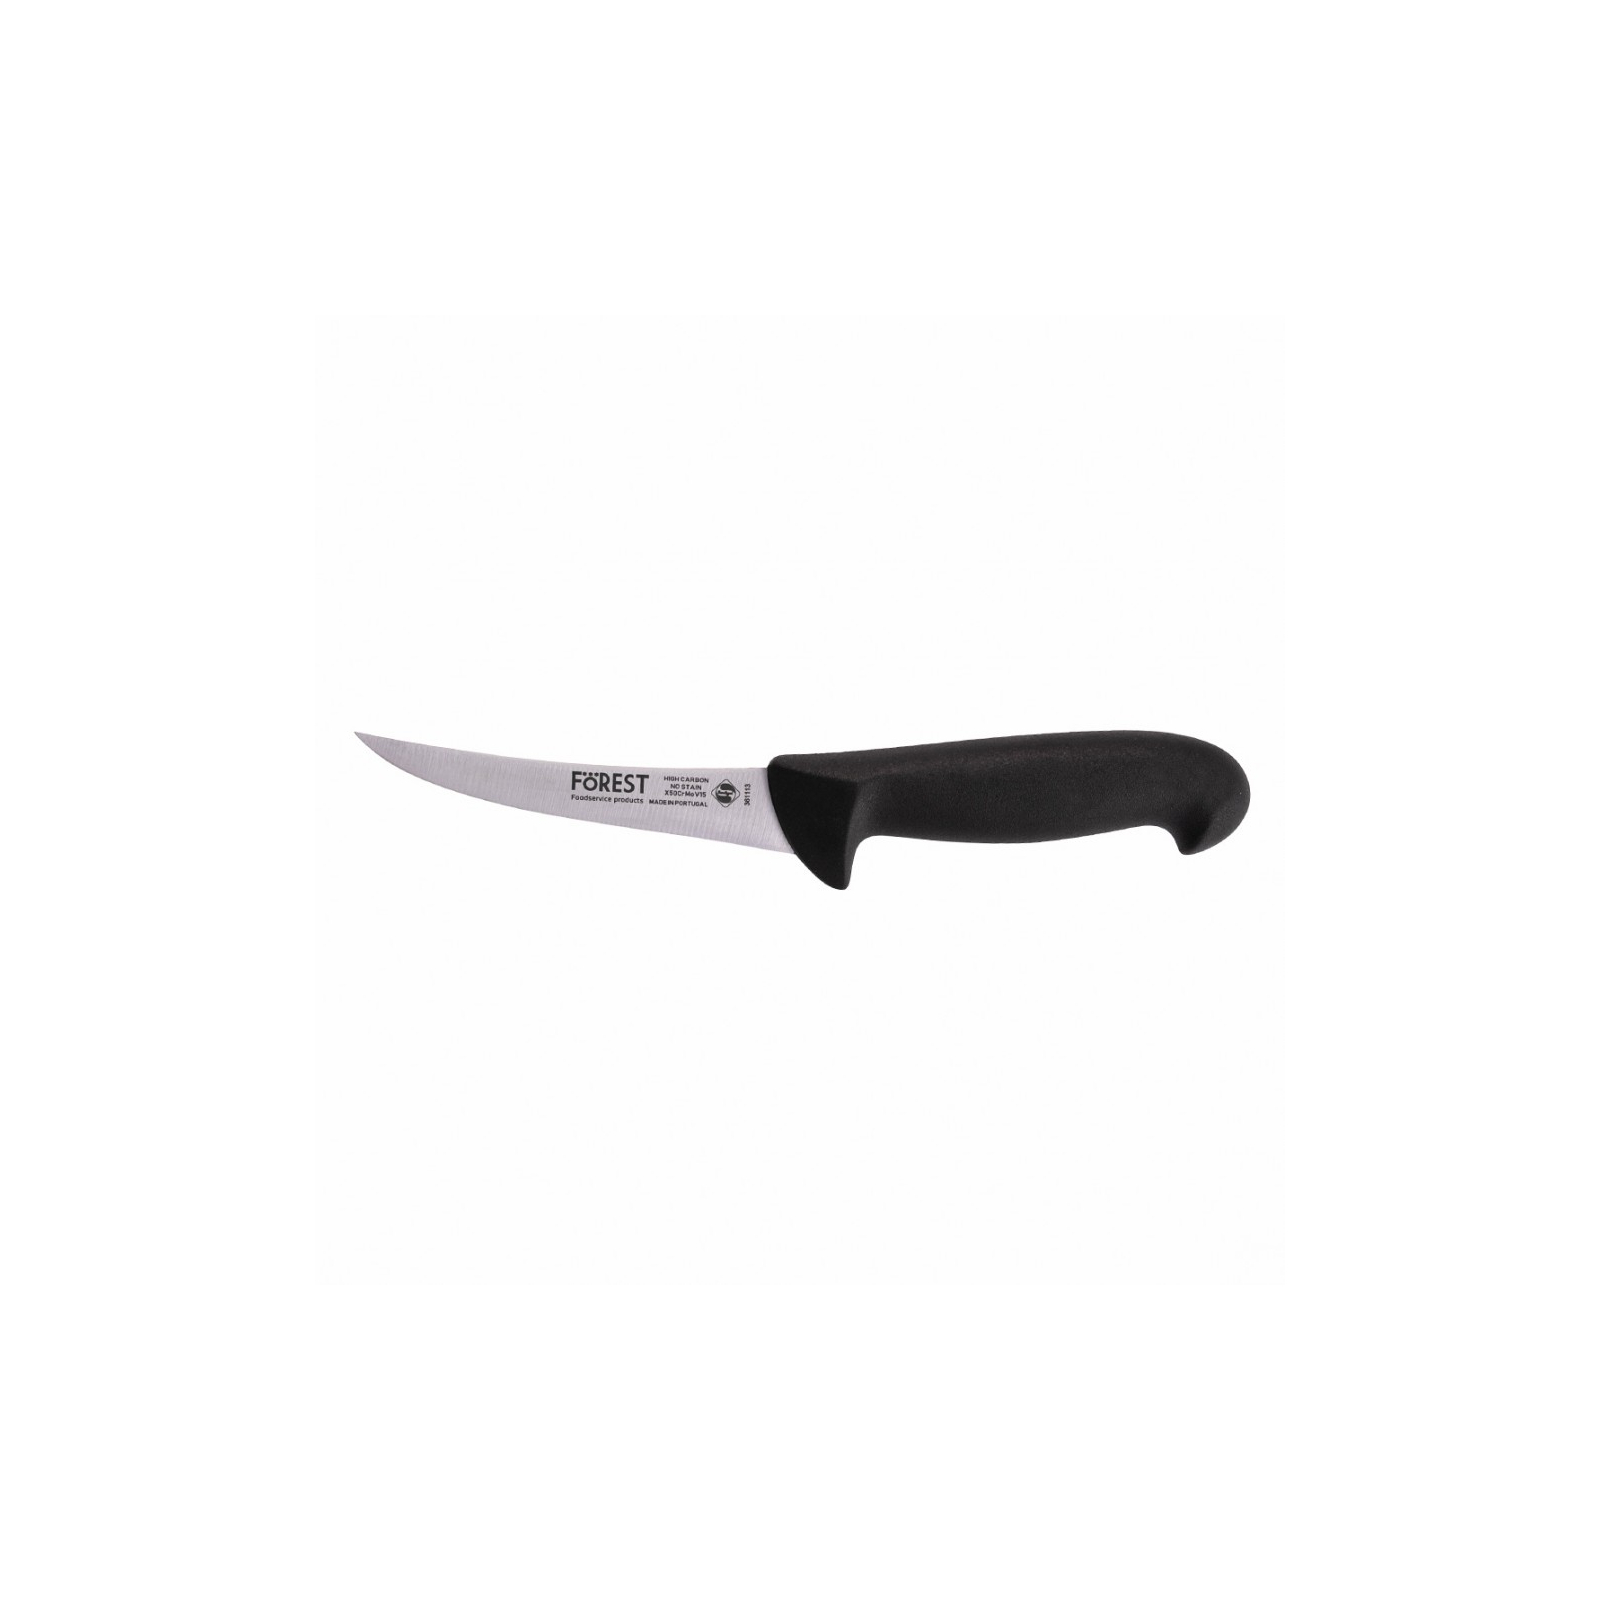 Кухонный нож FoREST обвалювальний напівгнучкий 130 мм Чорний (361113)